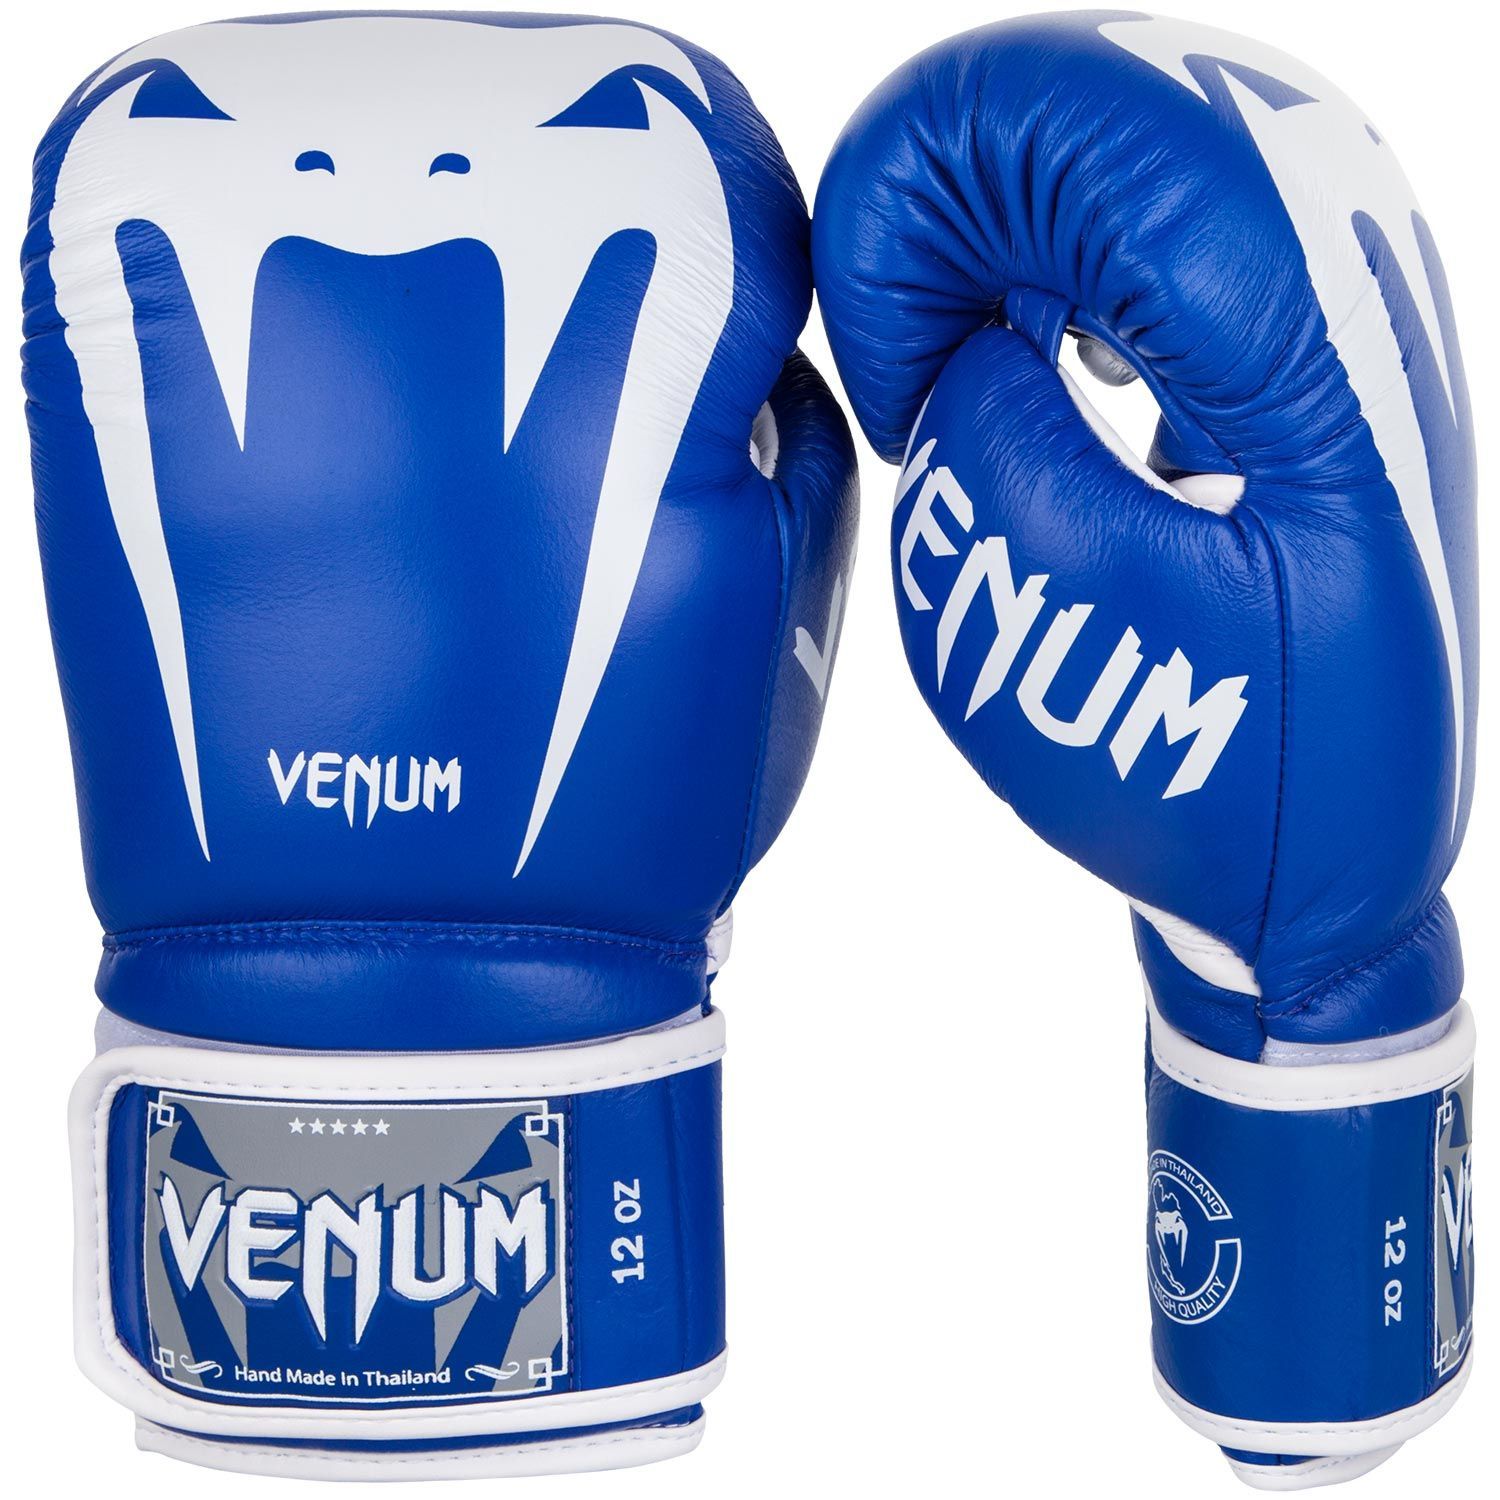 Venum Giant 3.0 Boxing Gloves - Blue